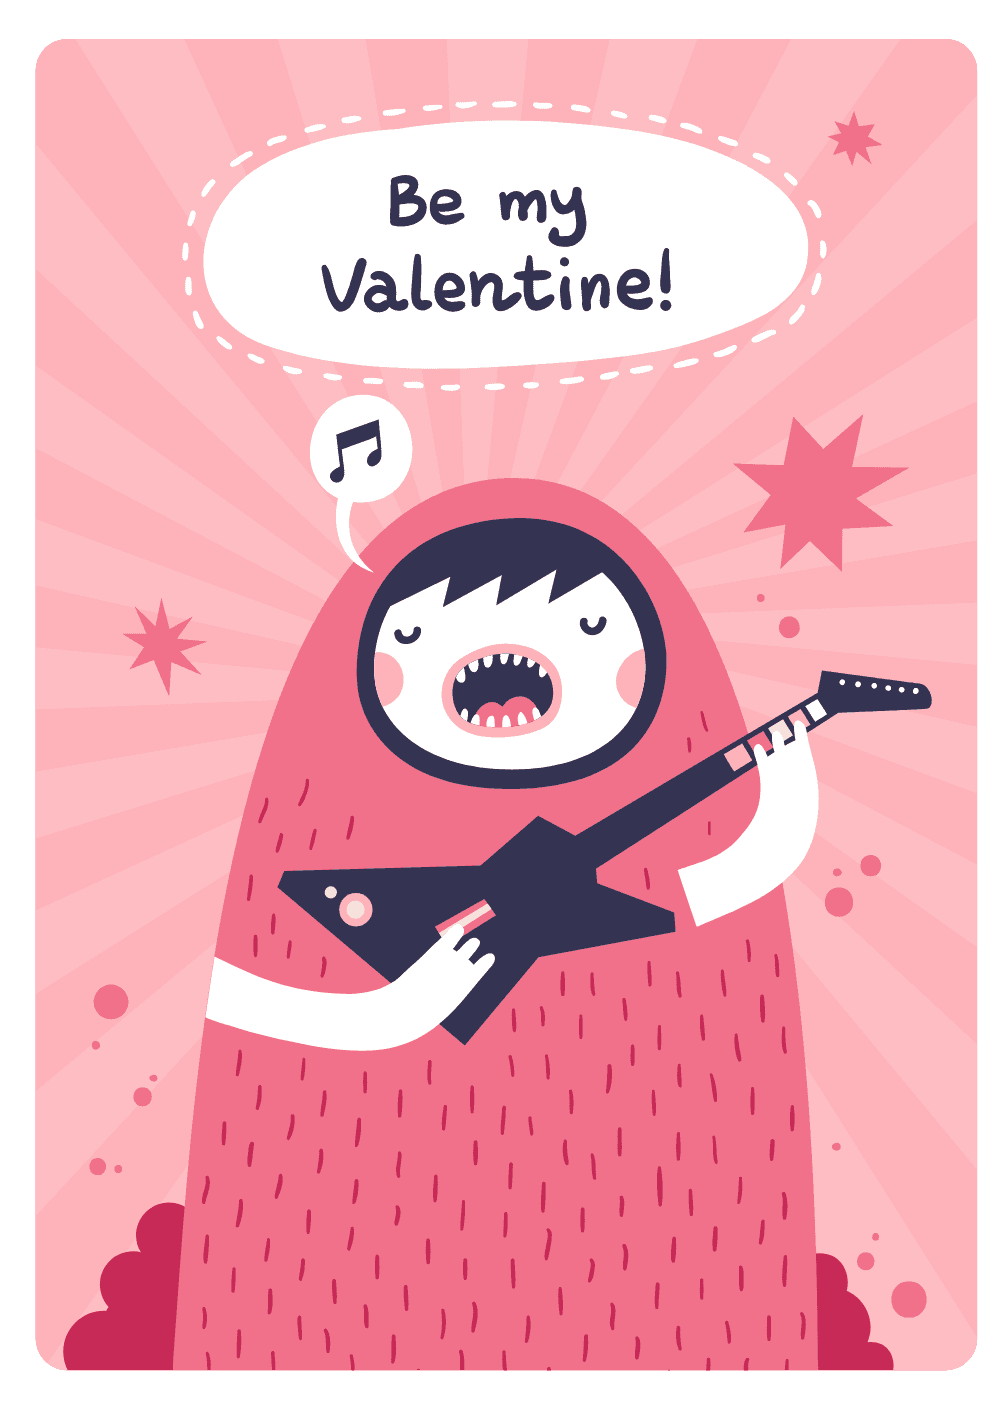 guitarist girl singing be my valentine Logo Template download